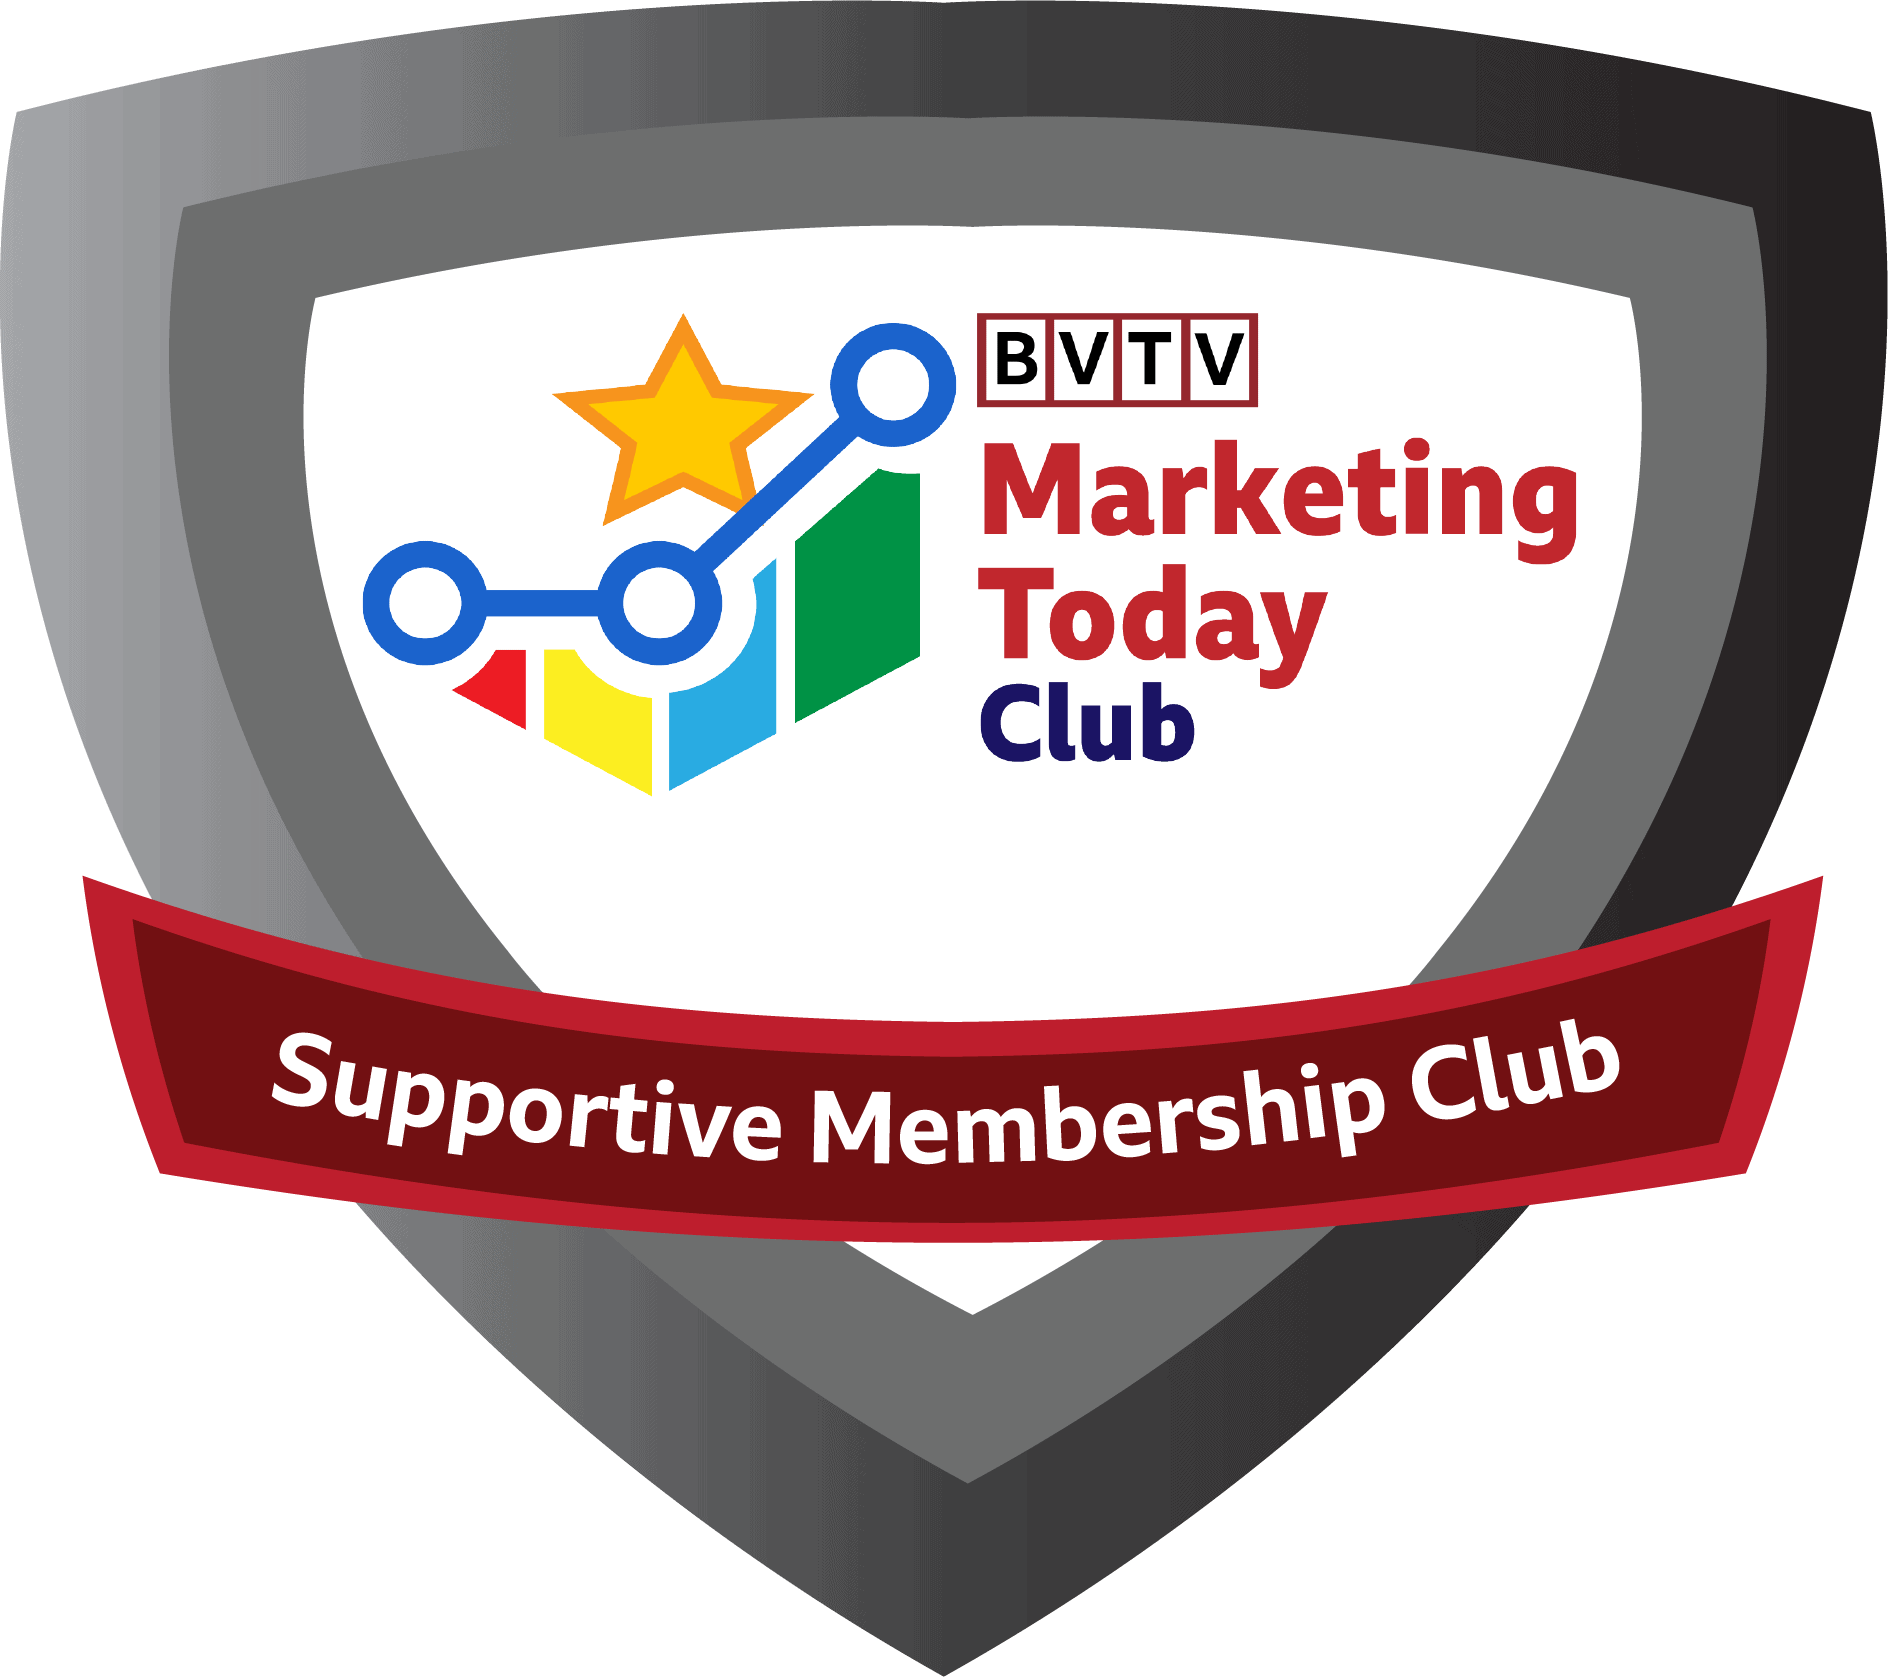 BVTV Marketing Today Club at www.bizvision.co.uk